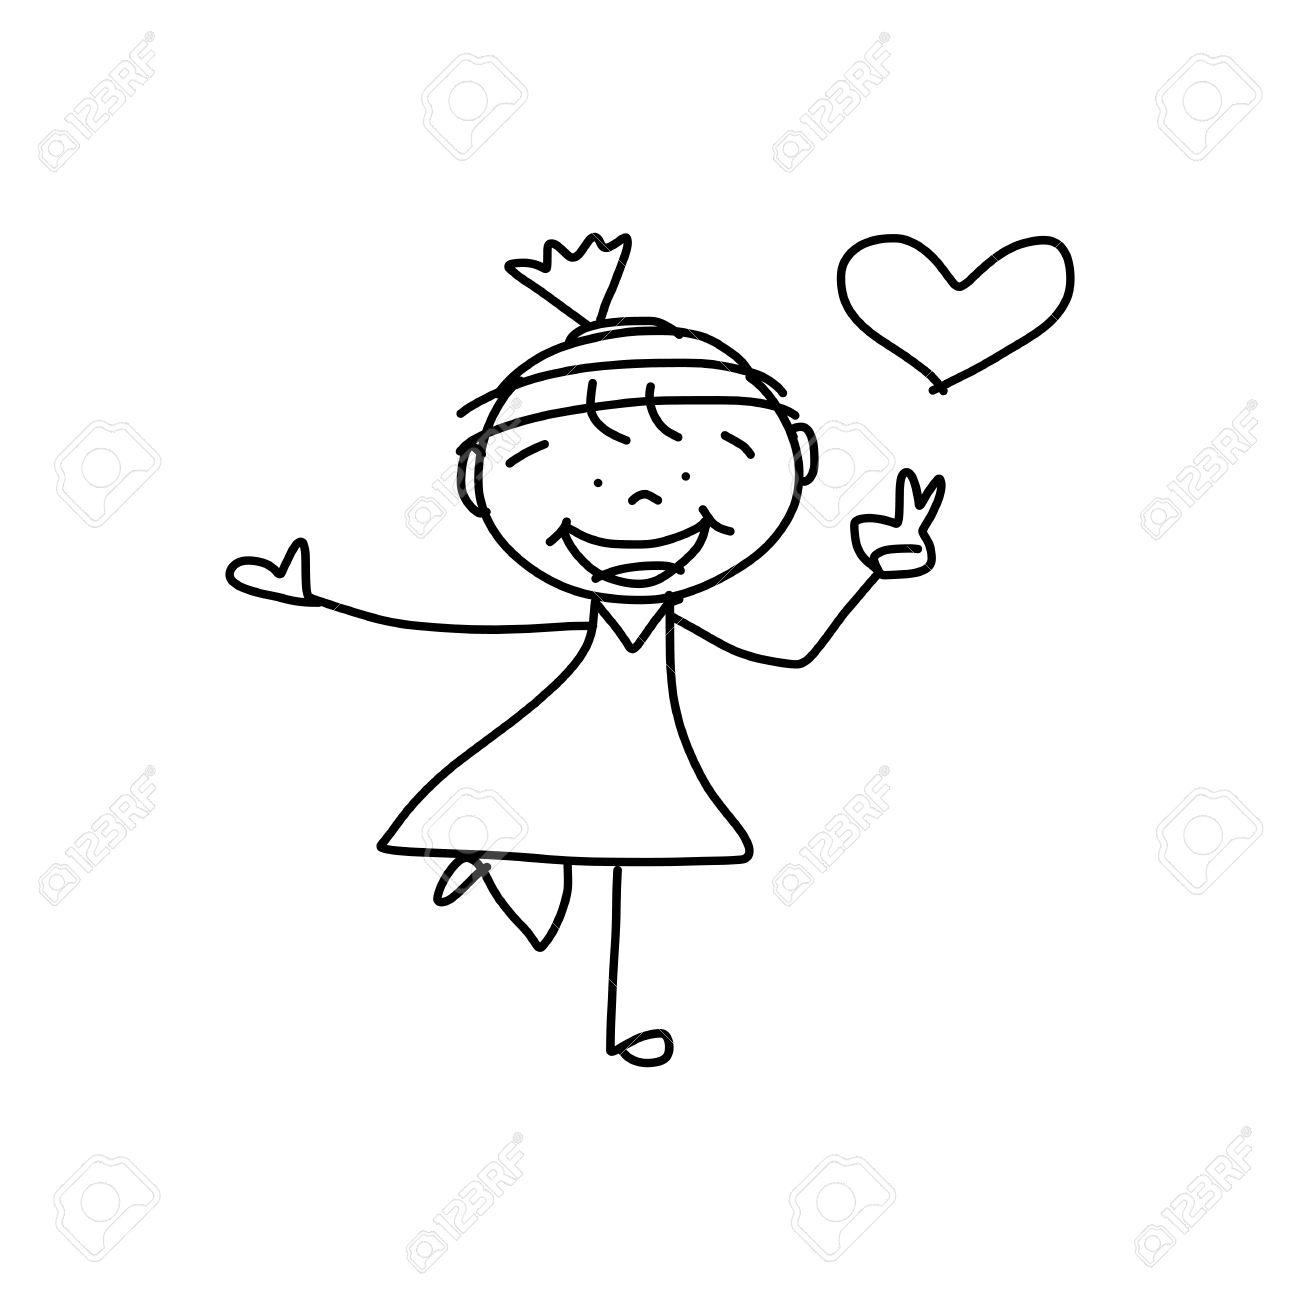 27675371-hand-drawing-cartoon-character-happy-business-woman-stock-photo.jpg